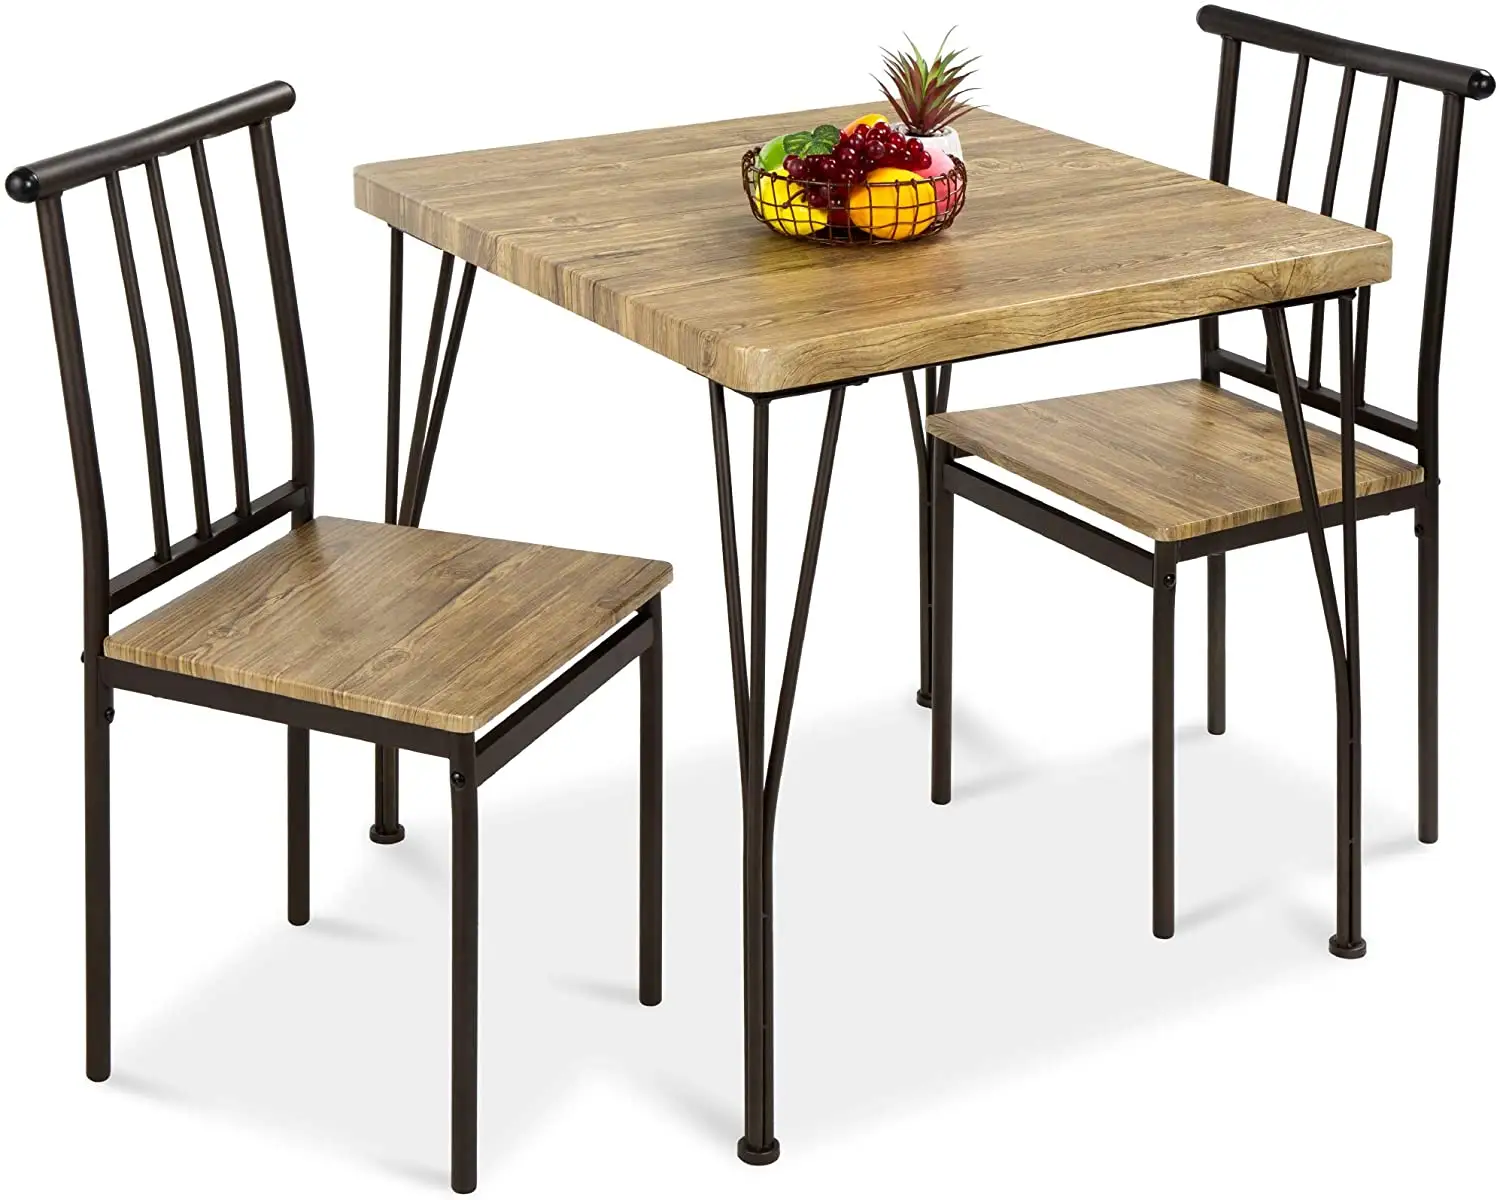 T נורדי תעשייתי מינימאלי עגול עץ אוכל שולחנות וכיסאות סט עבור חללים קטנים עץ למטבח